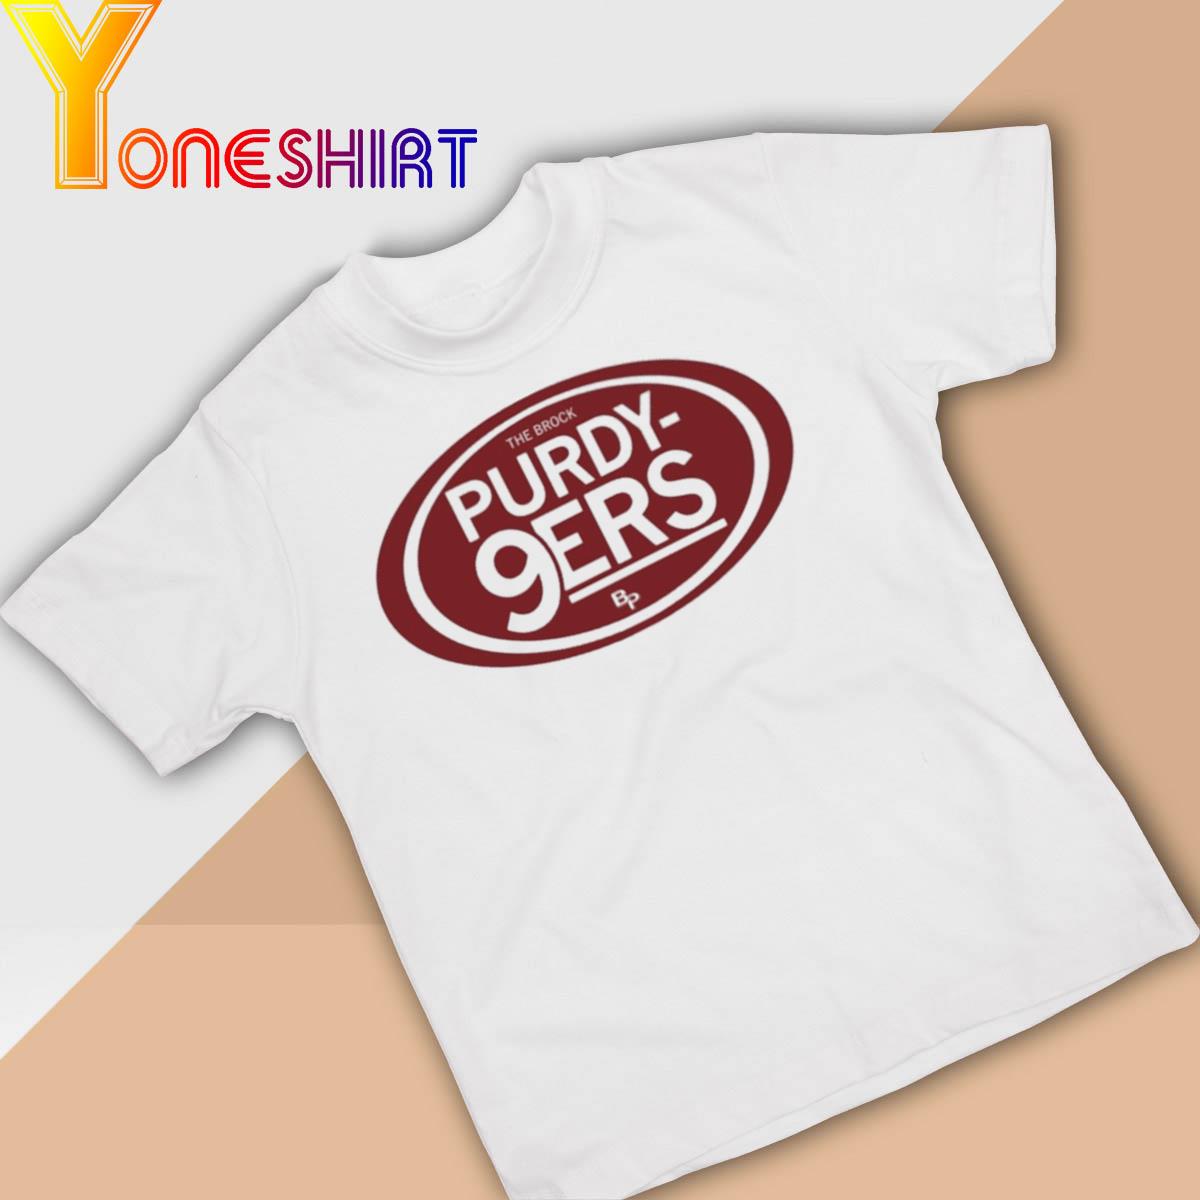 The Brock Purdy 9Ers Shirt